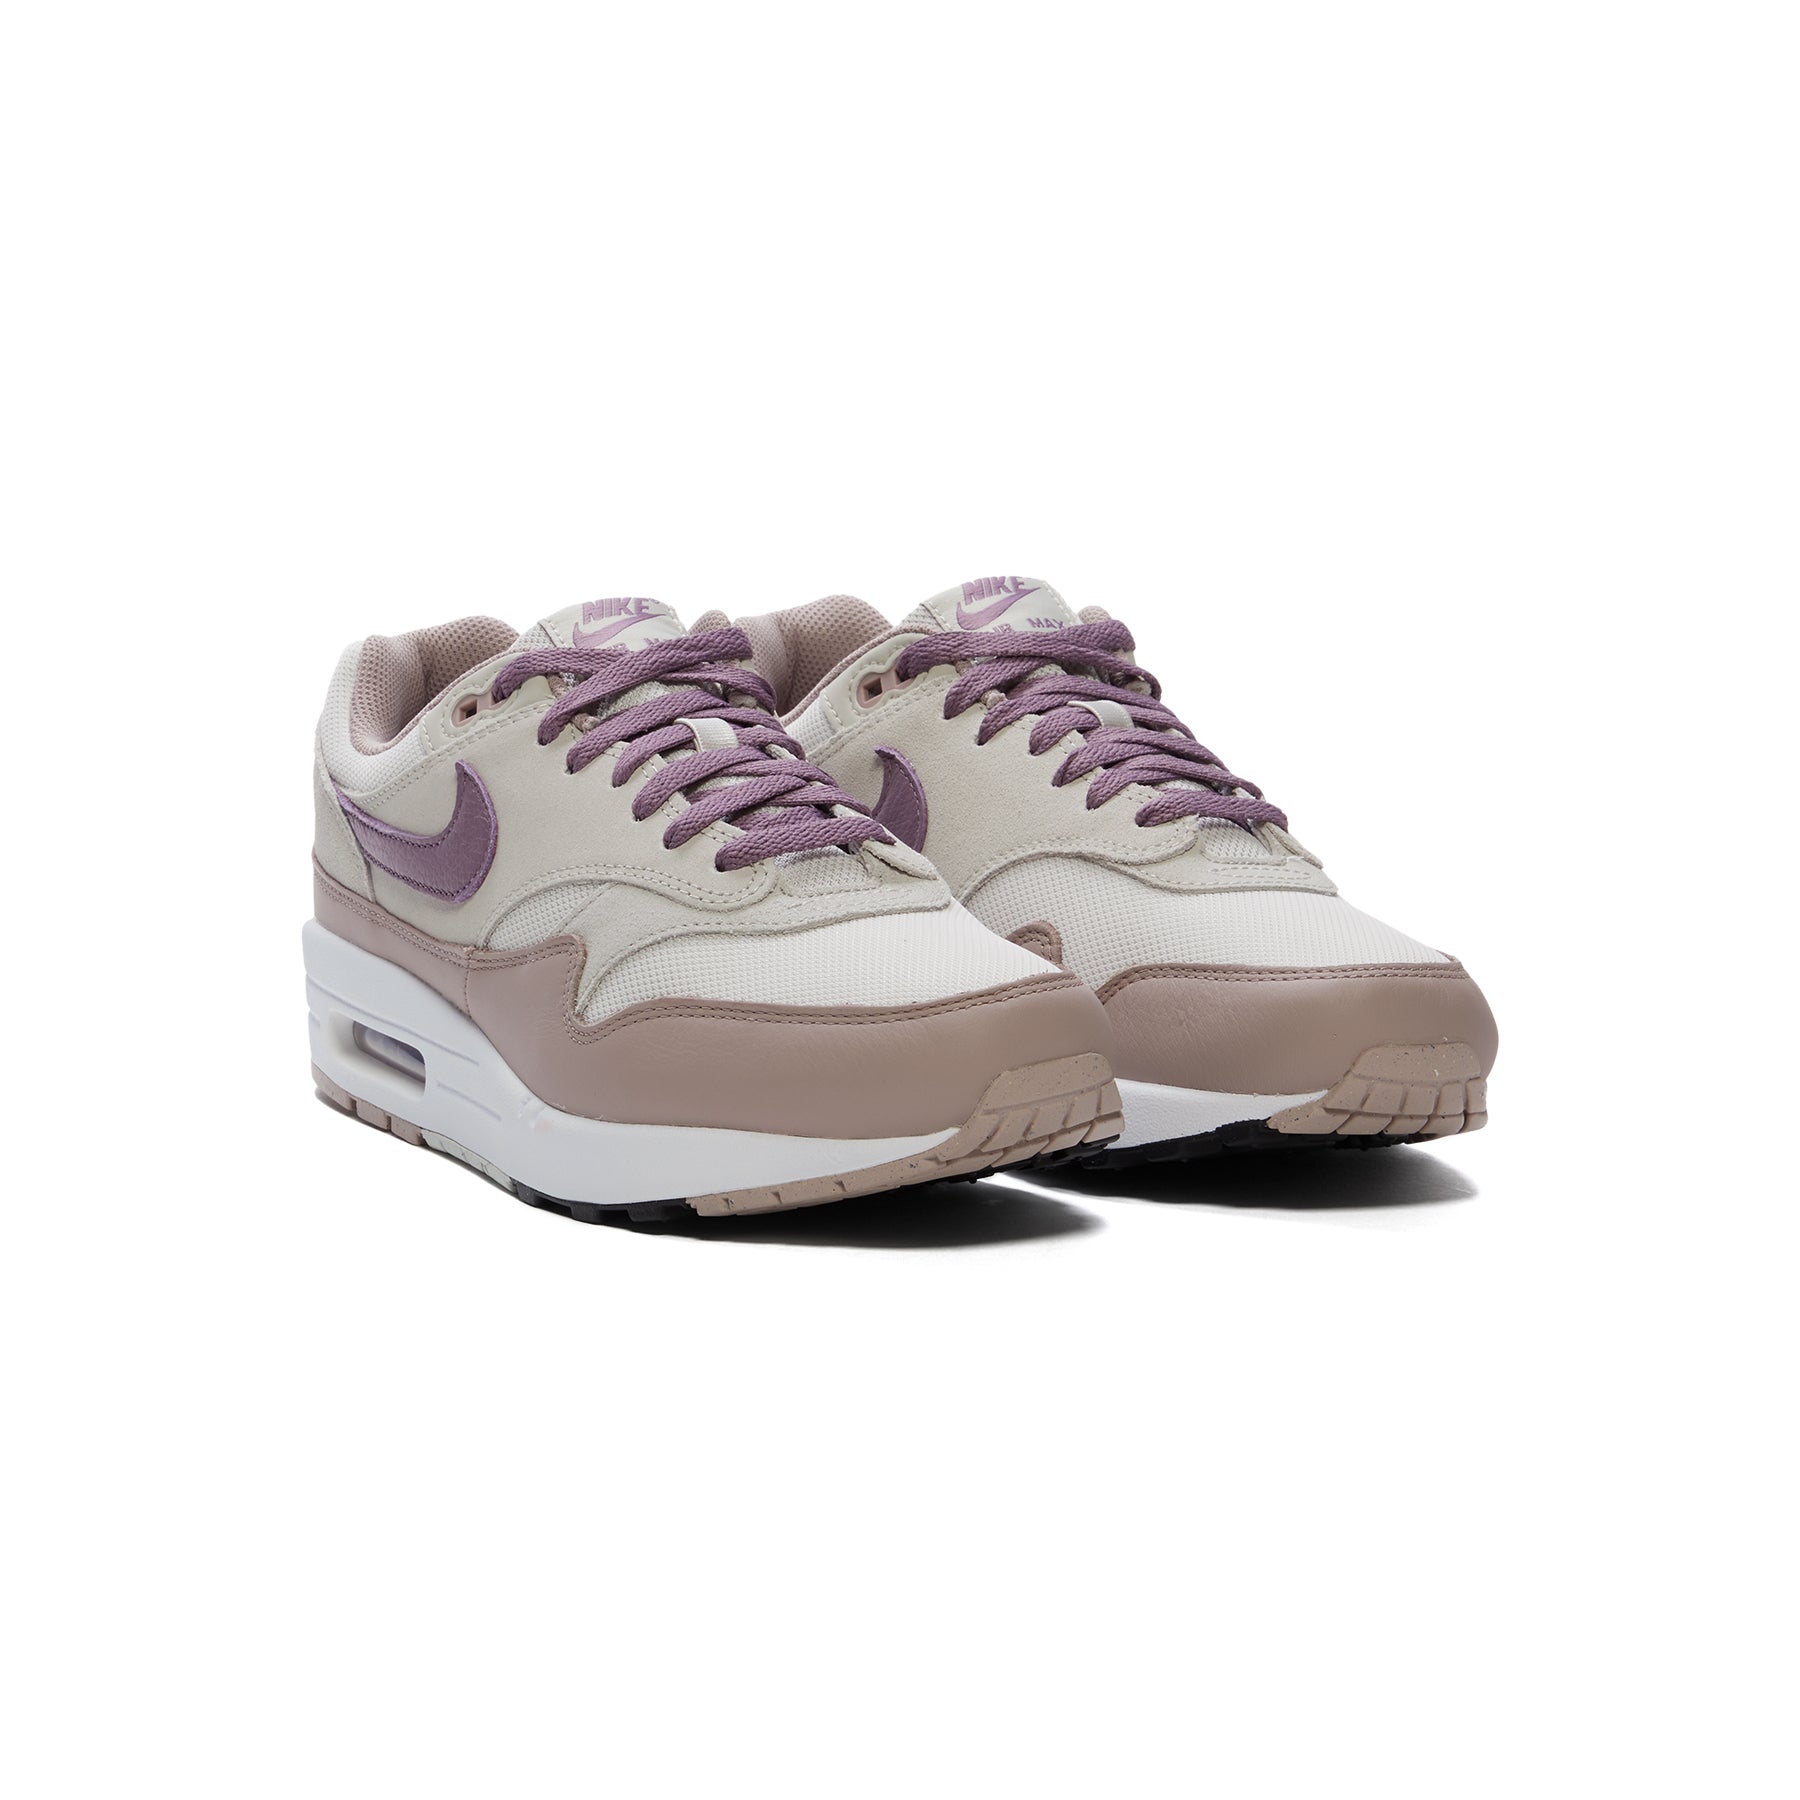 Chaussures et baskets homme Nike Air Max 1 SC Light Bone/ Violet